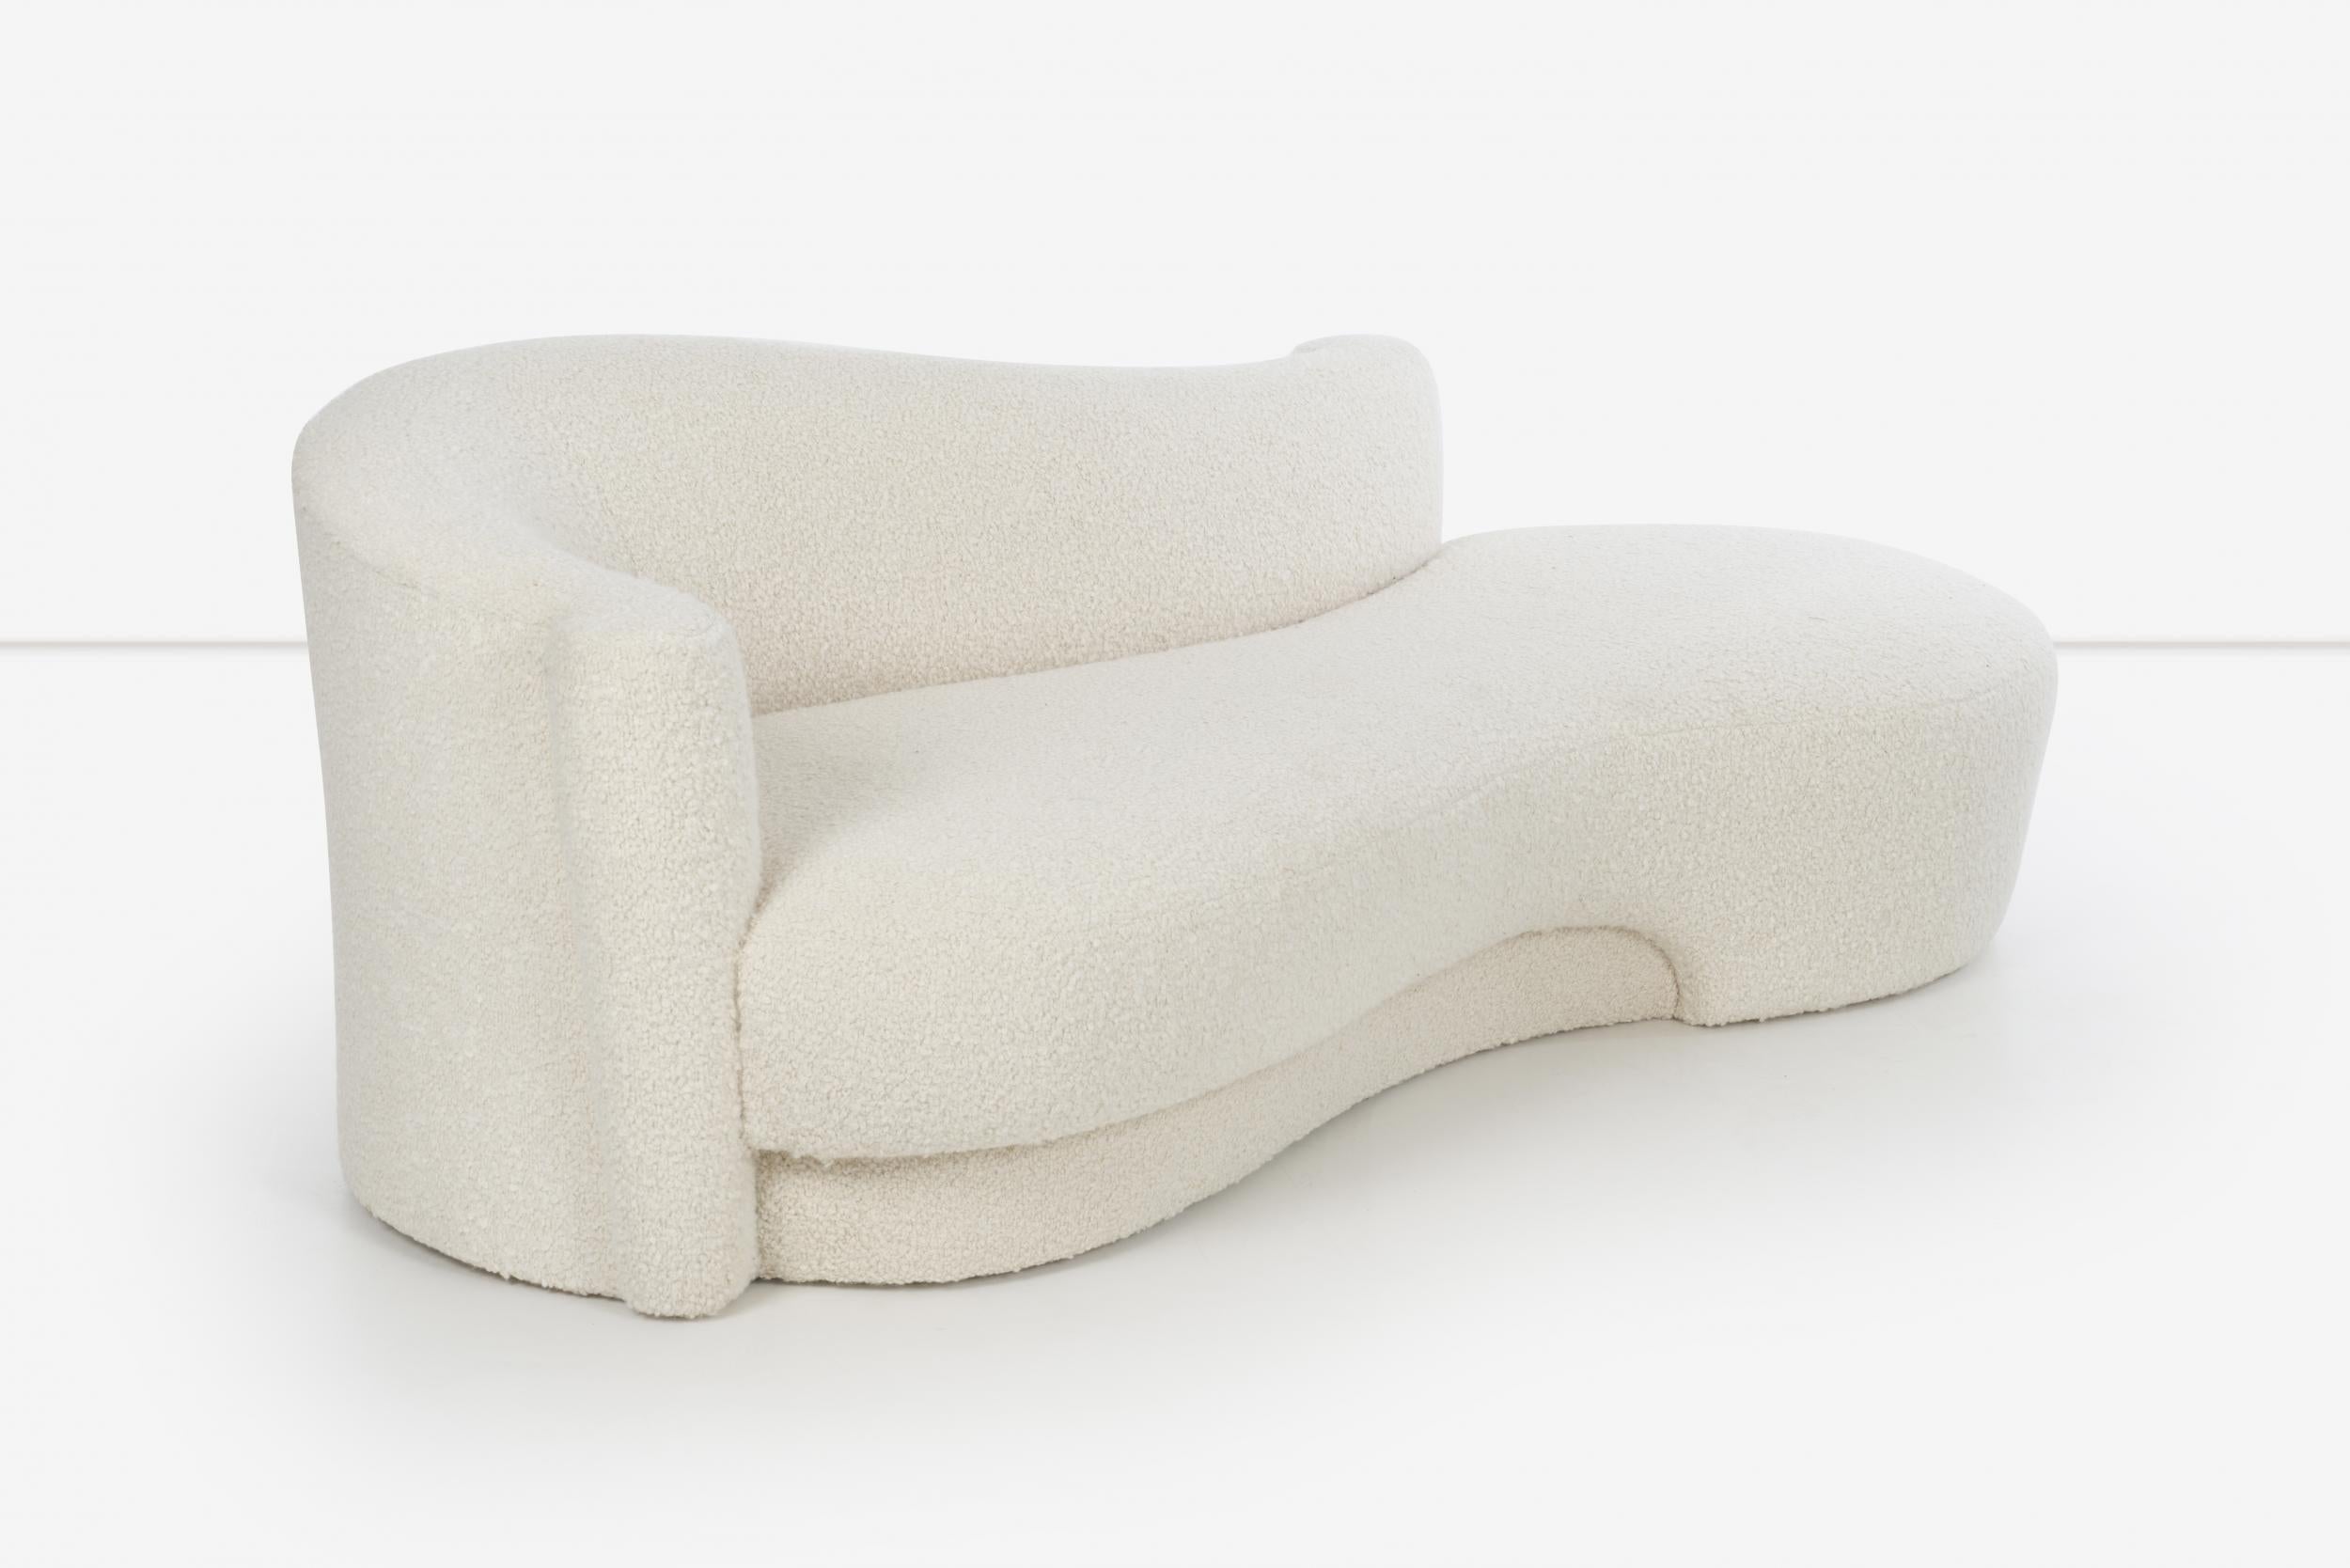 American Cloud Sofa in the Style of Vladimir Kagan